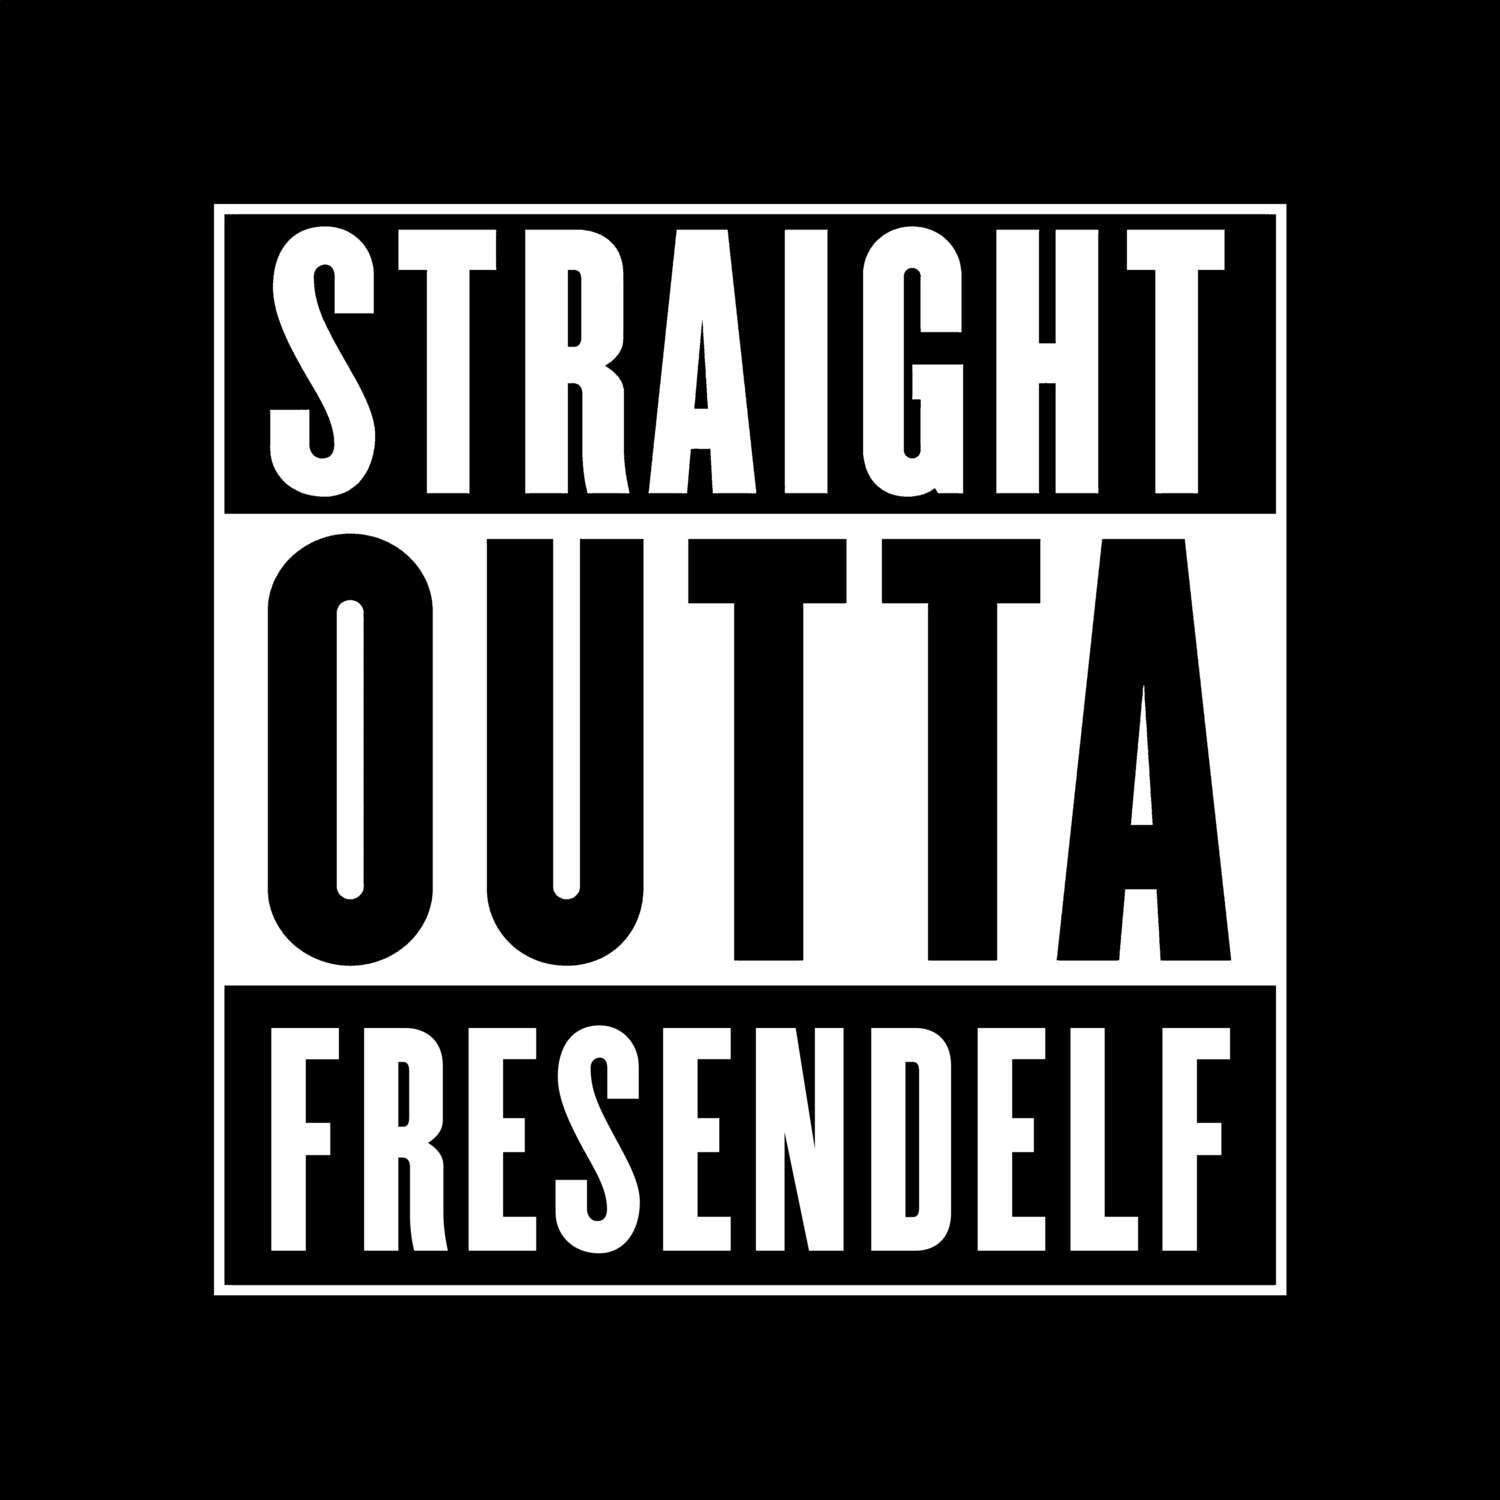 Fresendelf T-Shirt »Straight Outta«